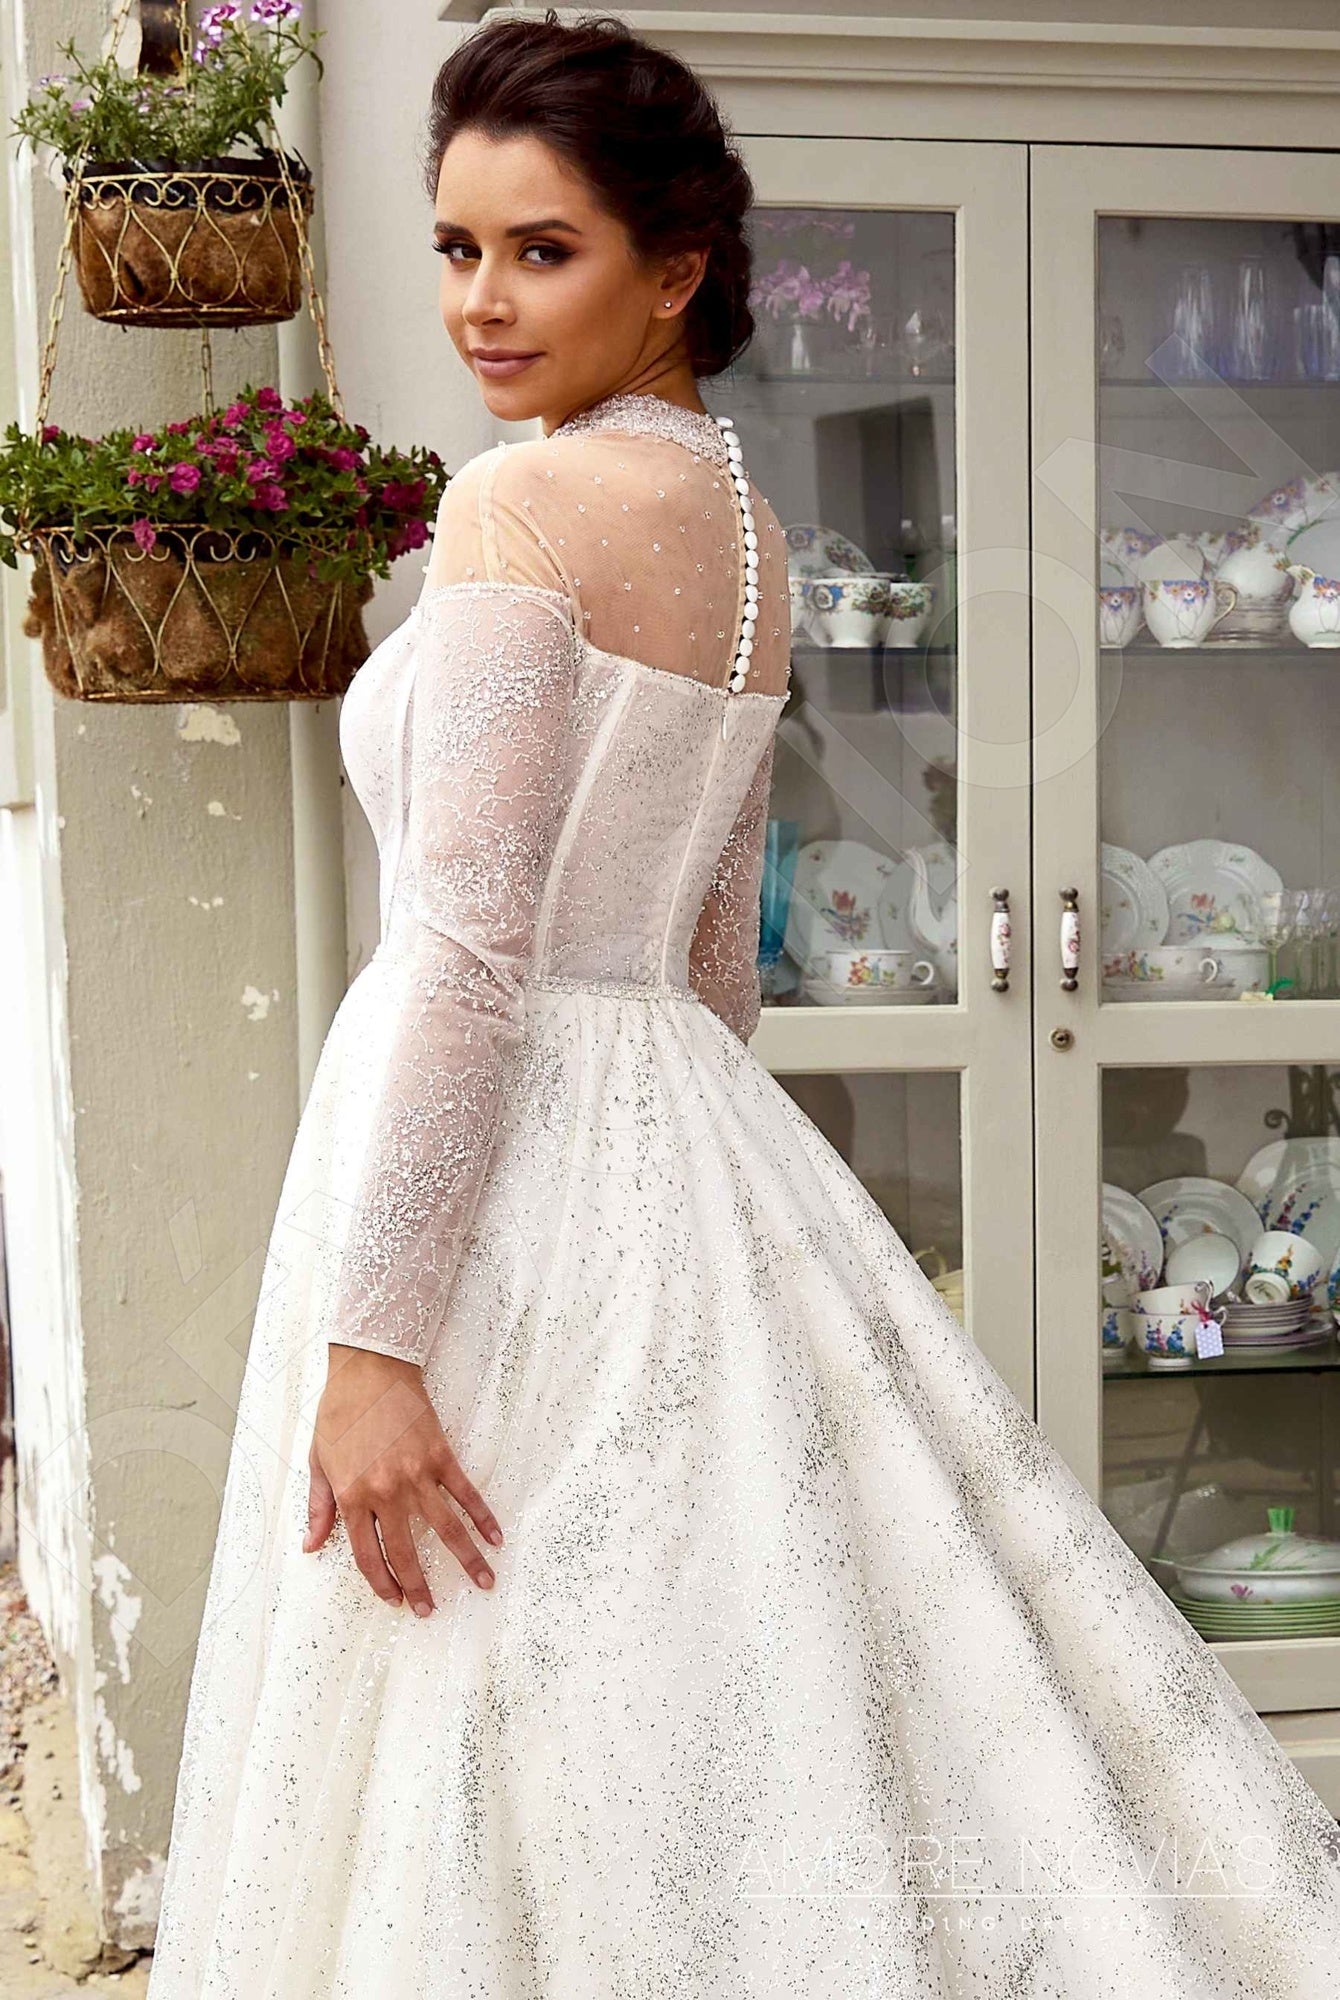 Lindsay Full back Princess/Ball Gown Long sleeve Wedding Dress 3